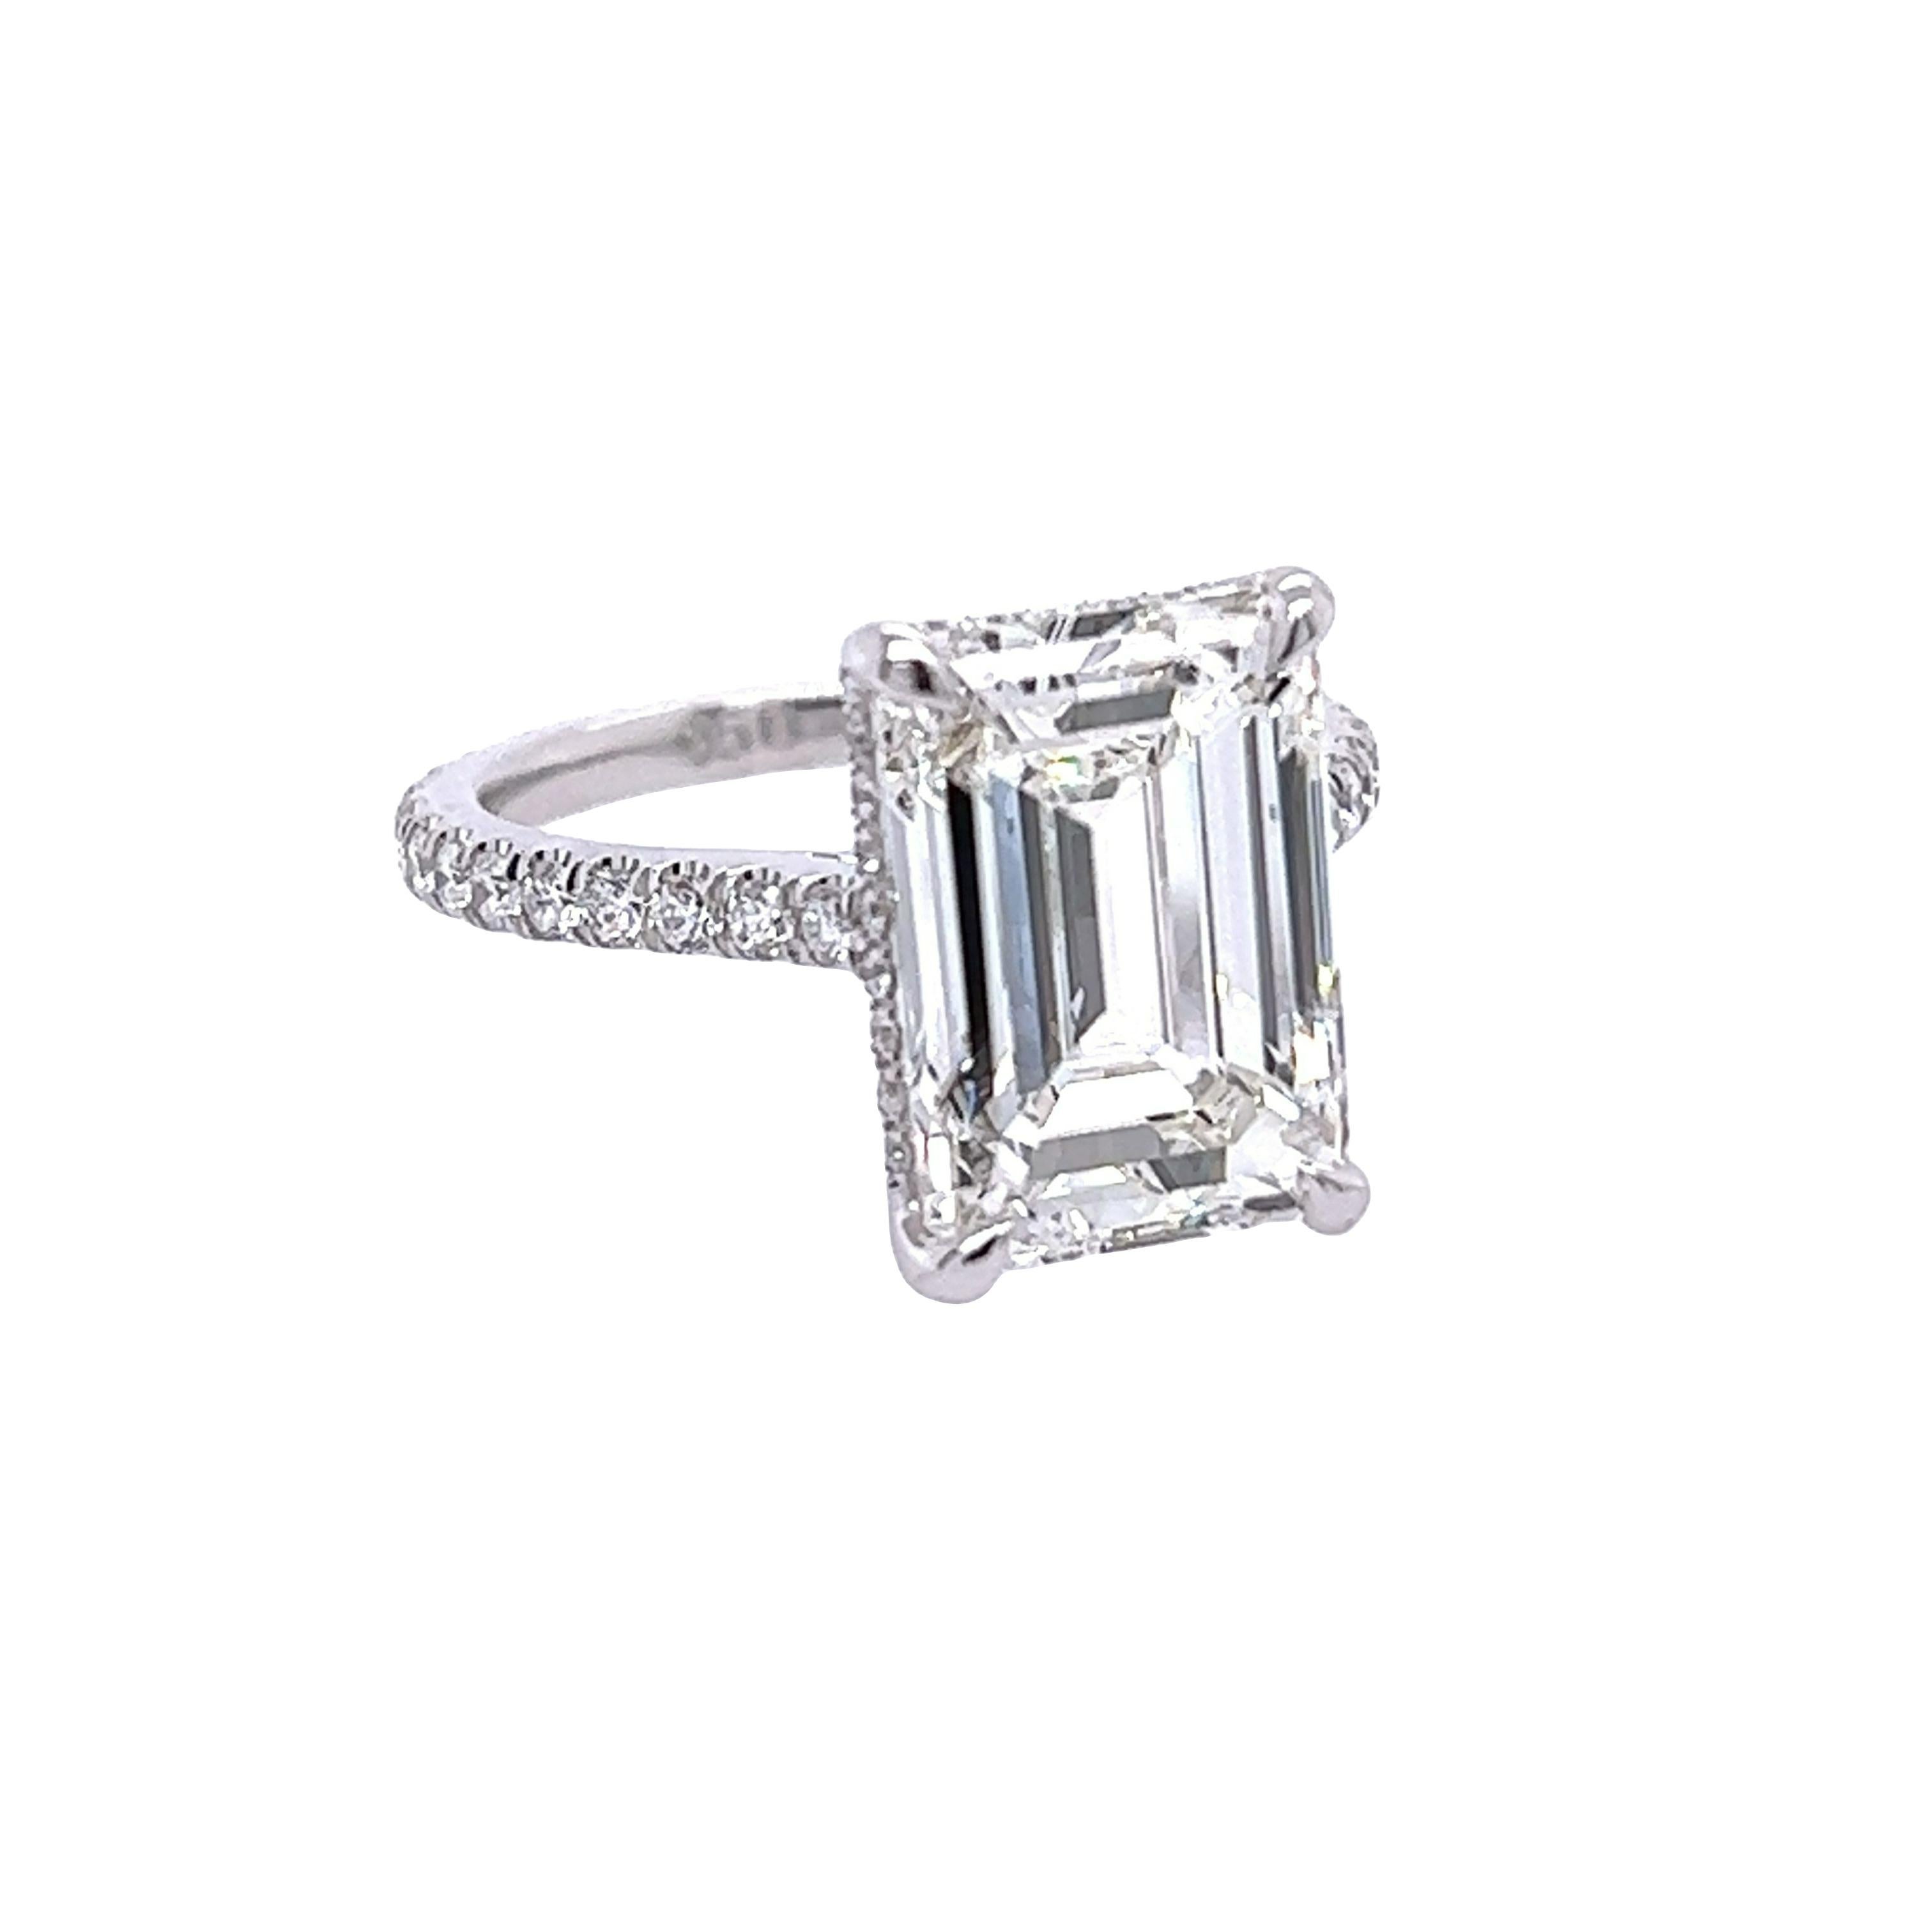 David Rosenberg 6.02 Carat Emerald Cut I VS1 GIA Diamond Engagement Ring 2